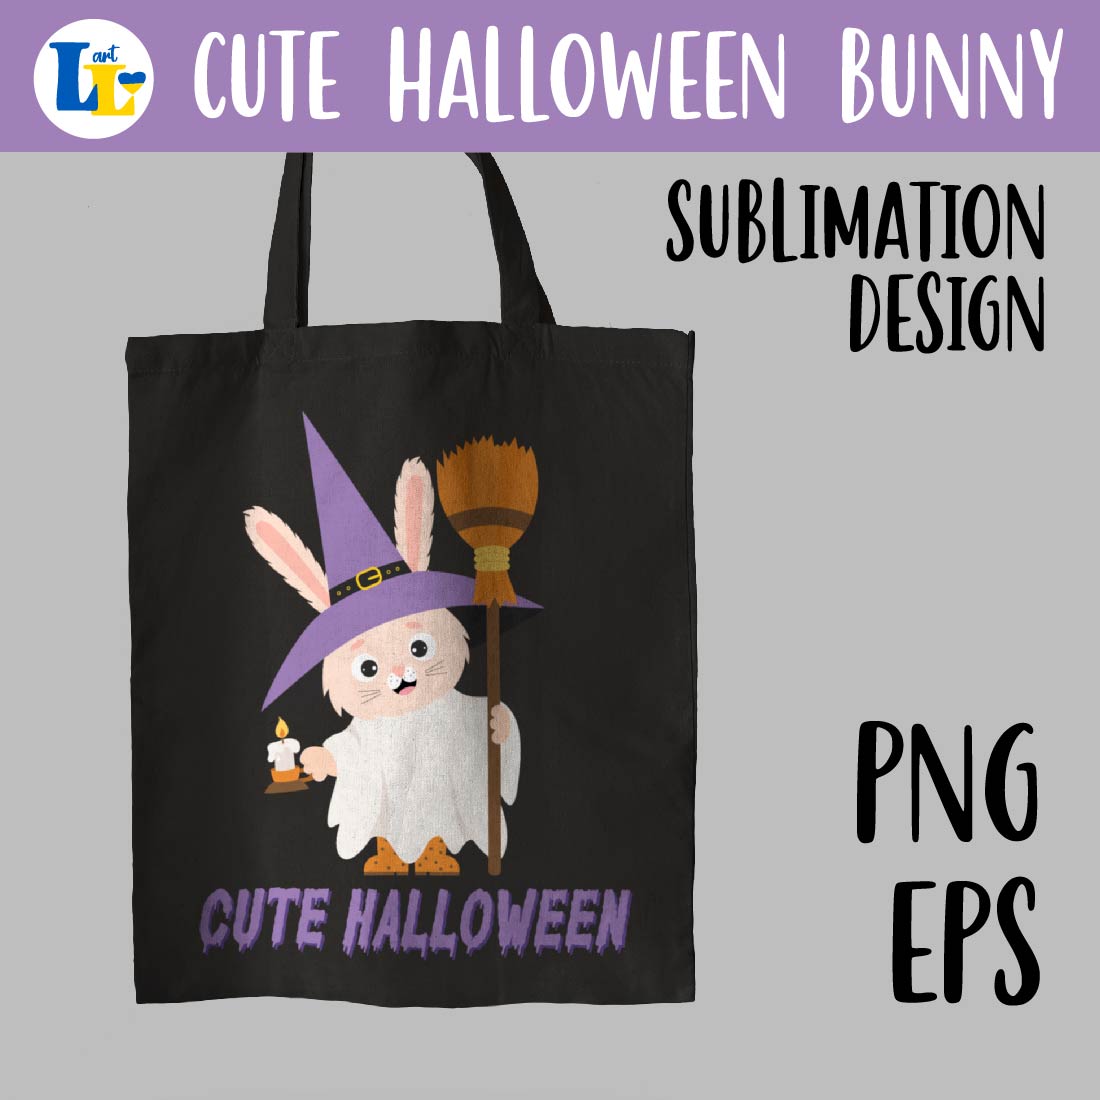 Cute Halloween Cartoon Ghost Rabbit Sublimation Design cover image.